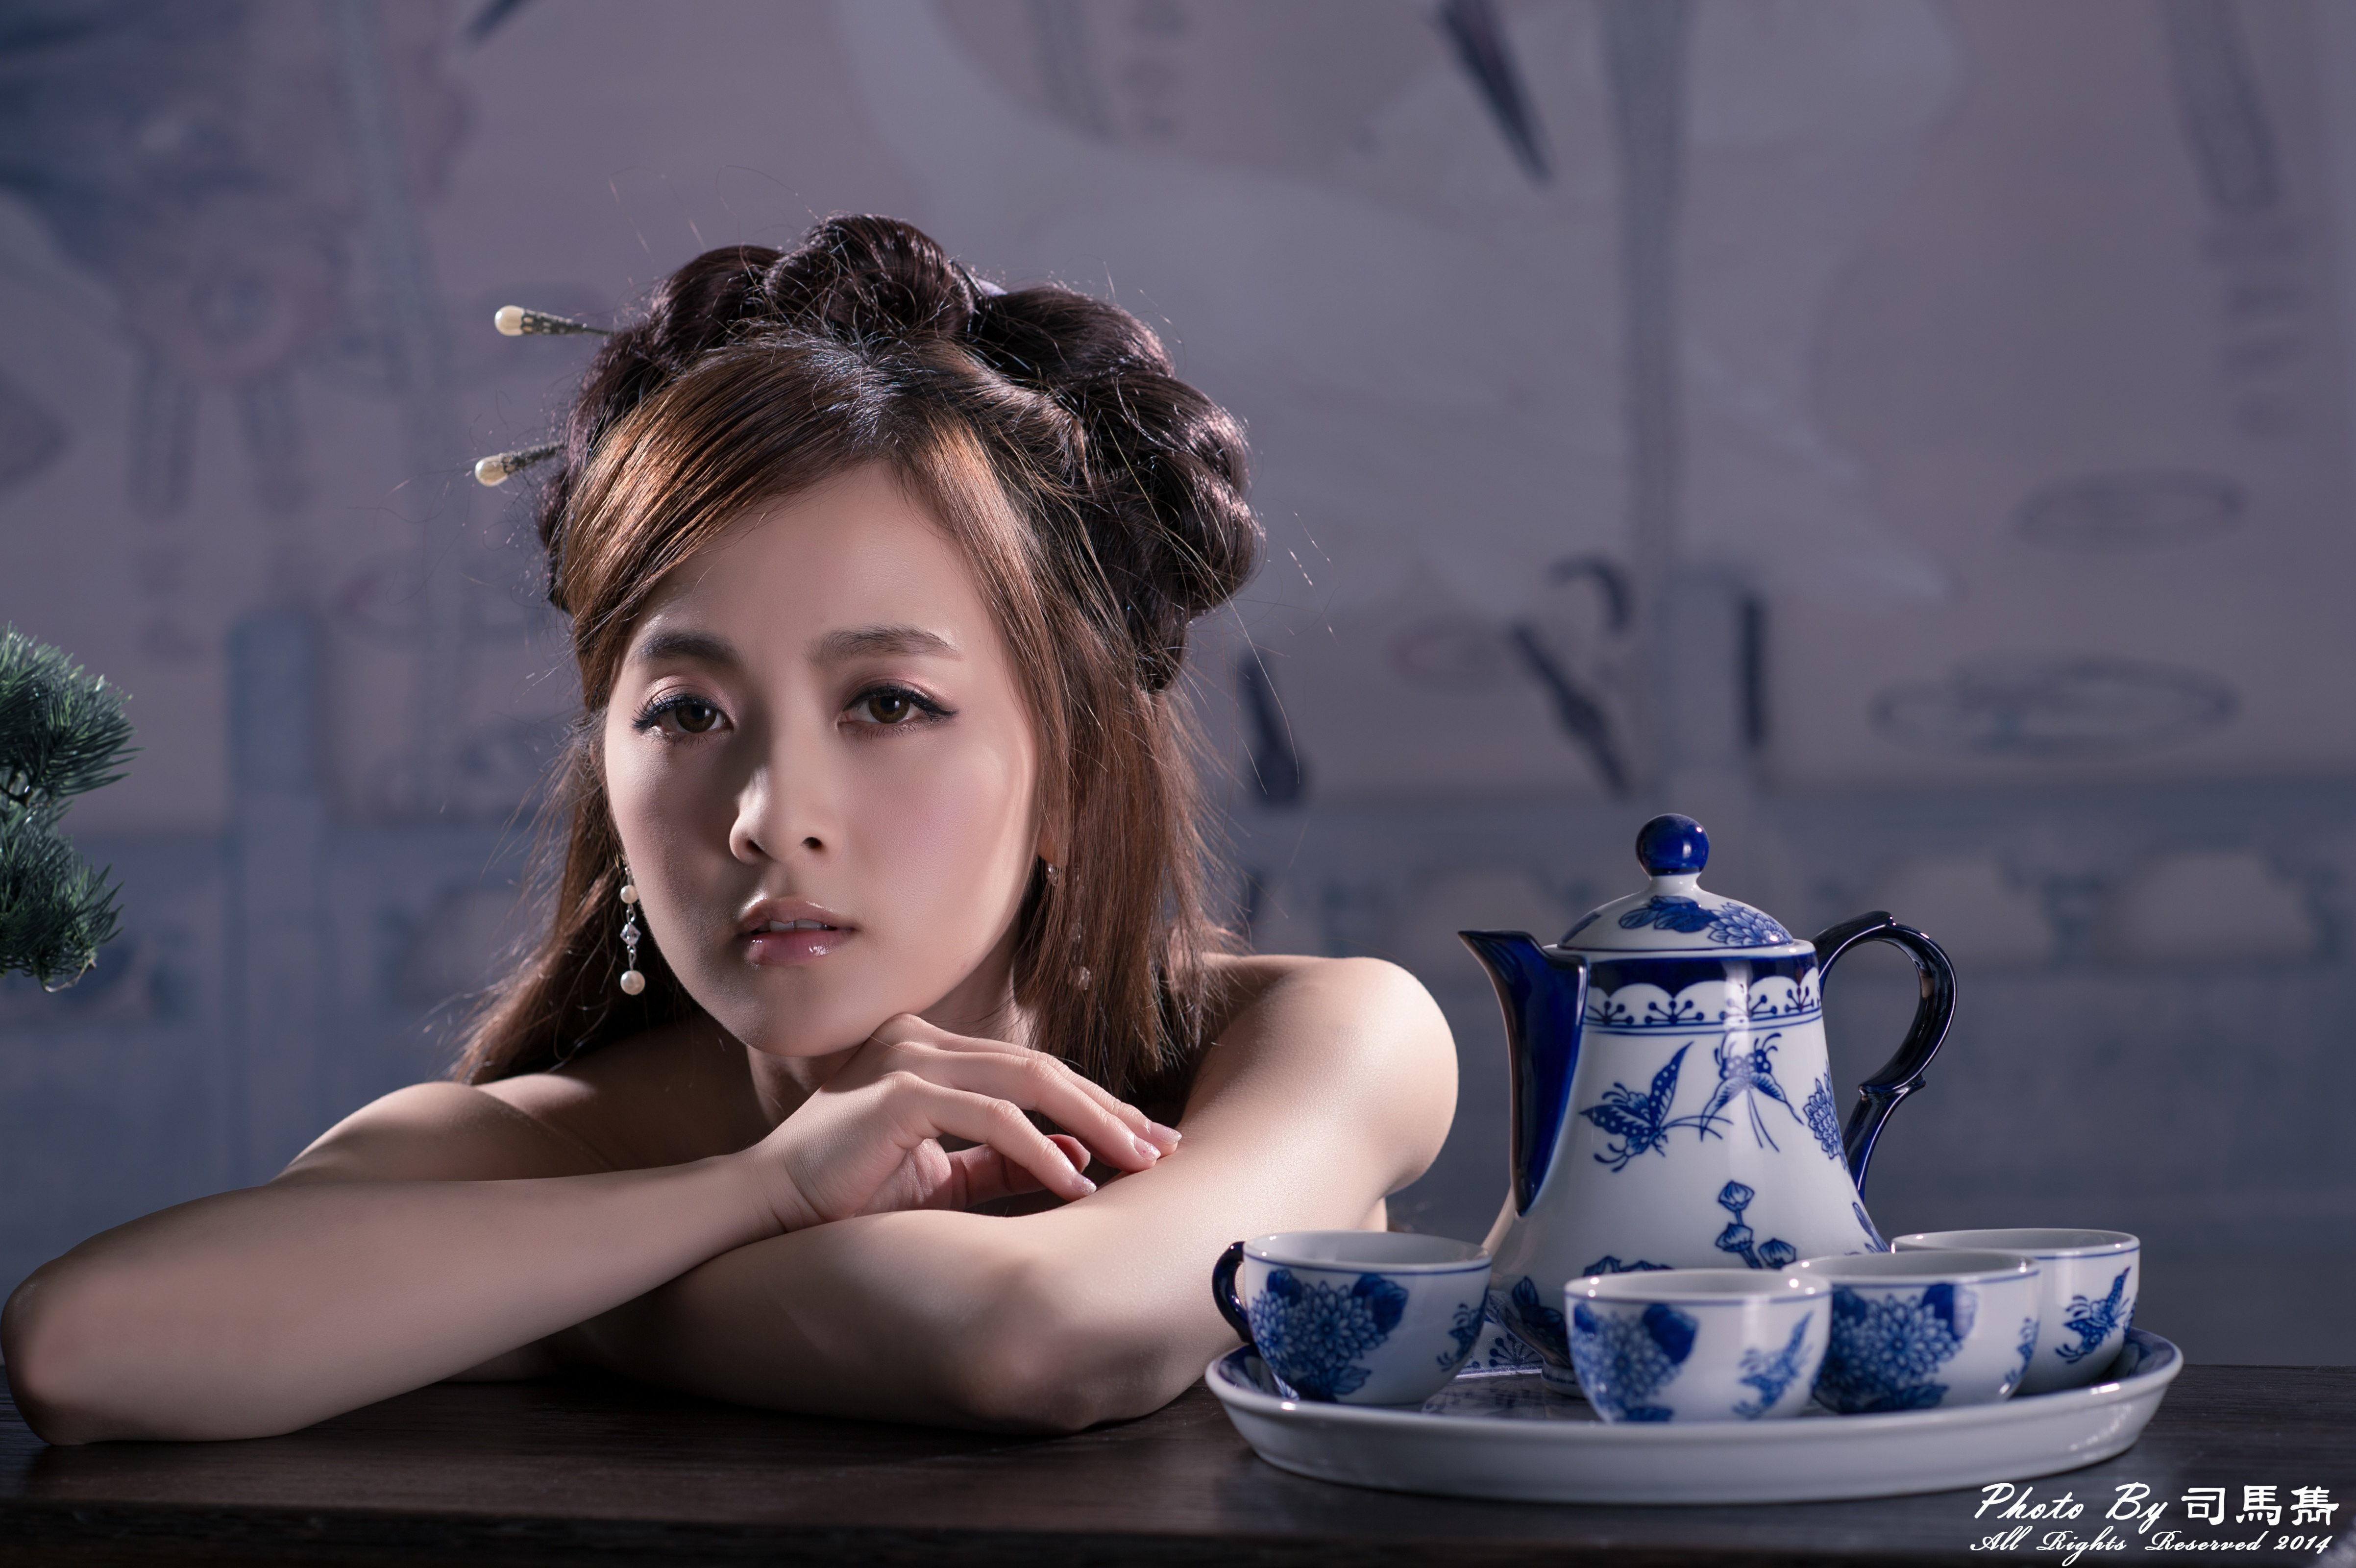 686043 descargar imagen mujeres, mikako zhang kaijie, asiática, república popular china, chino, horquilla, peluquería, taiwanés, juego de té: fondos de pantalla y protectores de pantalla gratis